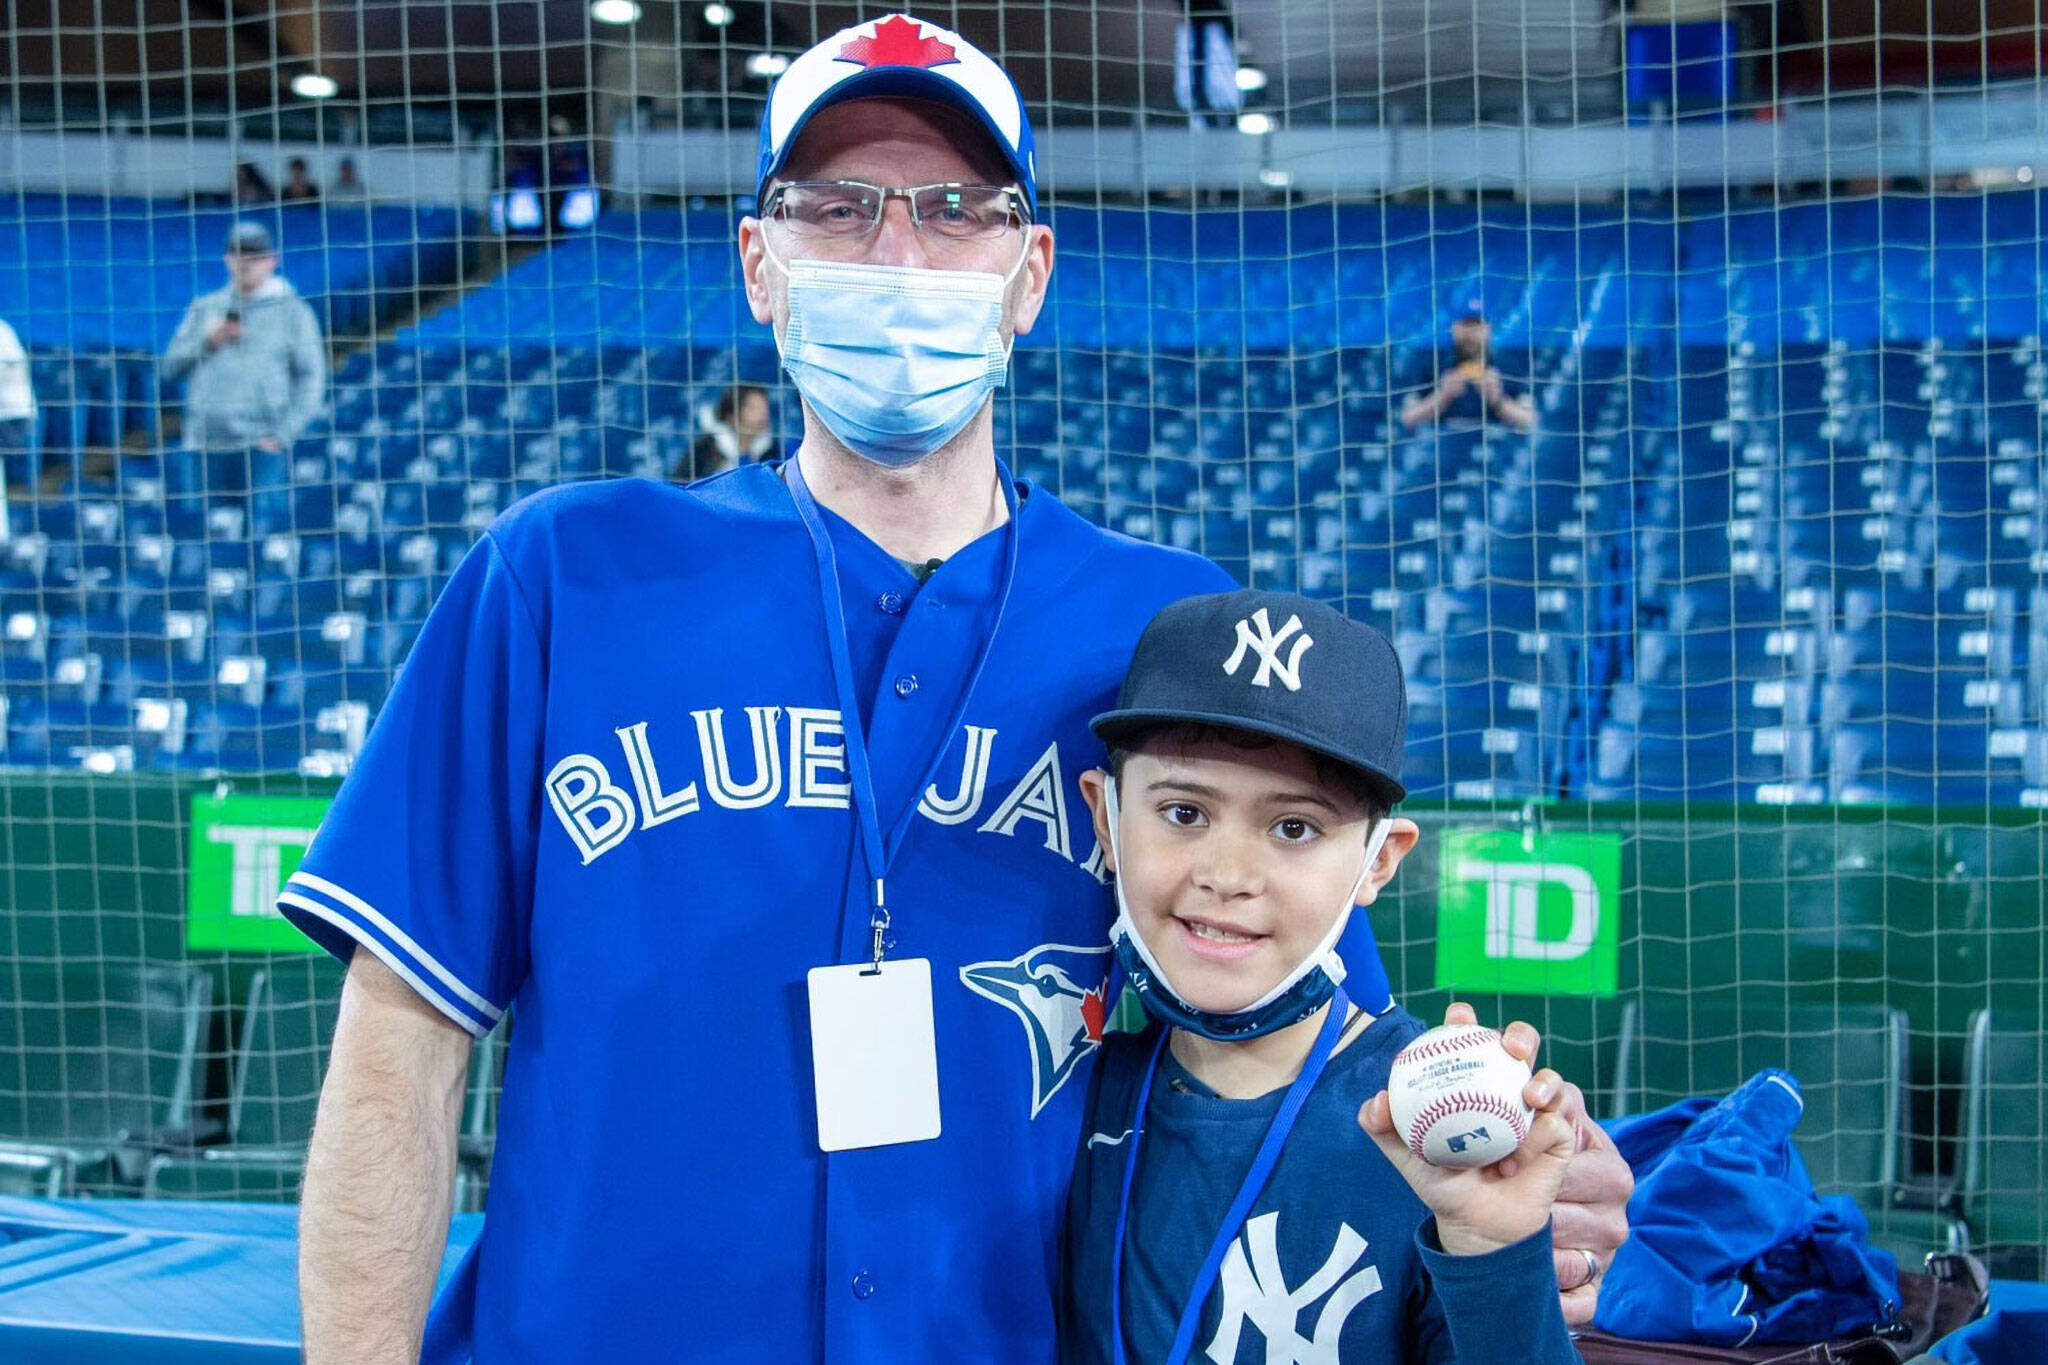 Toronto Blue Jays fan who gave home run ball to kid gets reward he